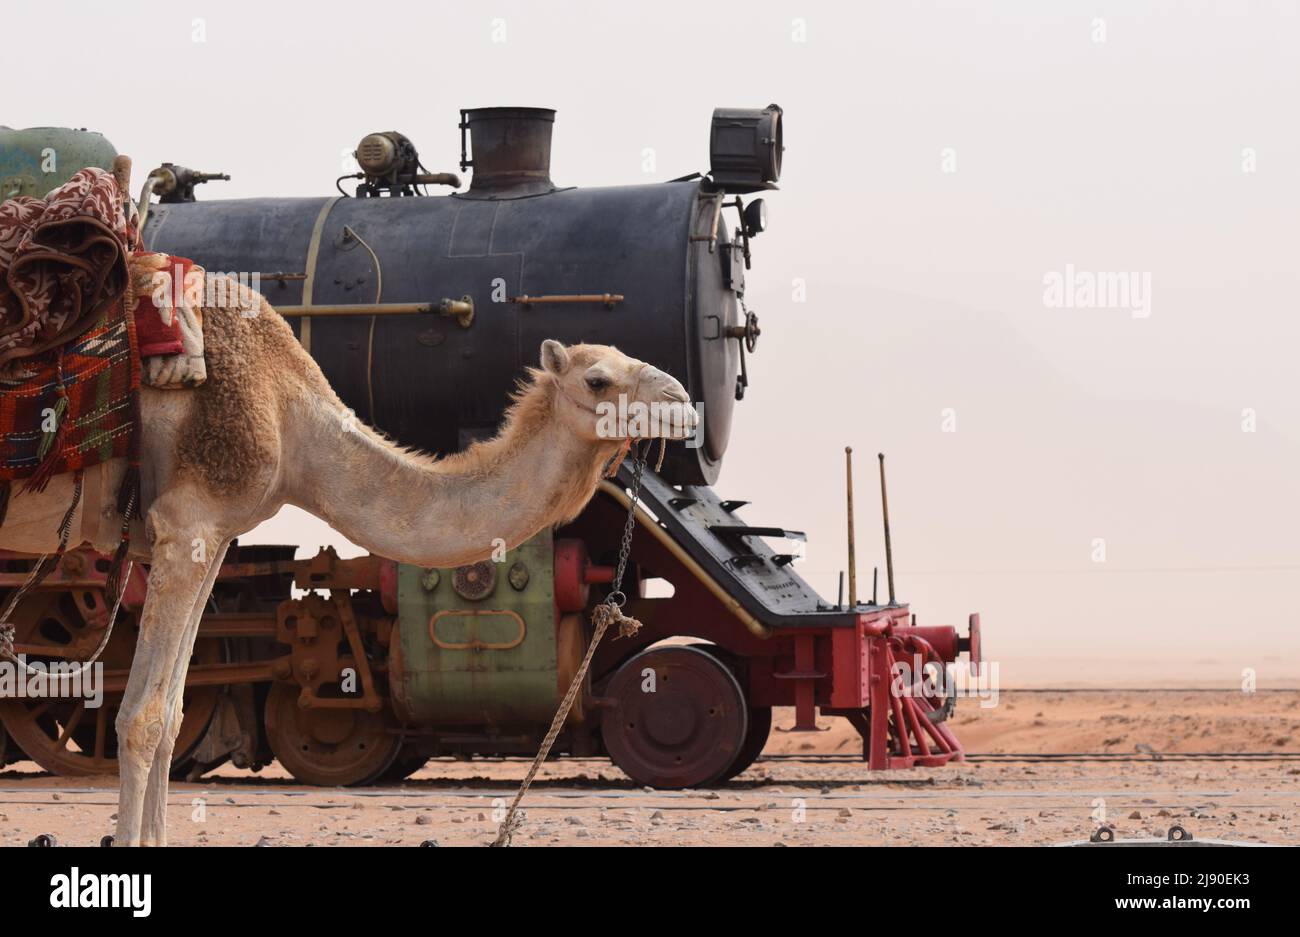 A Bedouin’s camel standing in front of a vintage steam train locomotive engine in the desert of Wadi Rum in Jordan Stock Photo